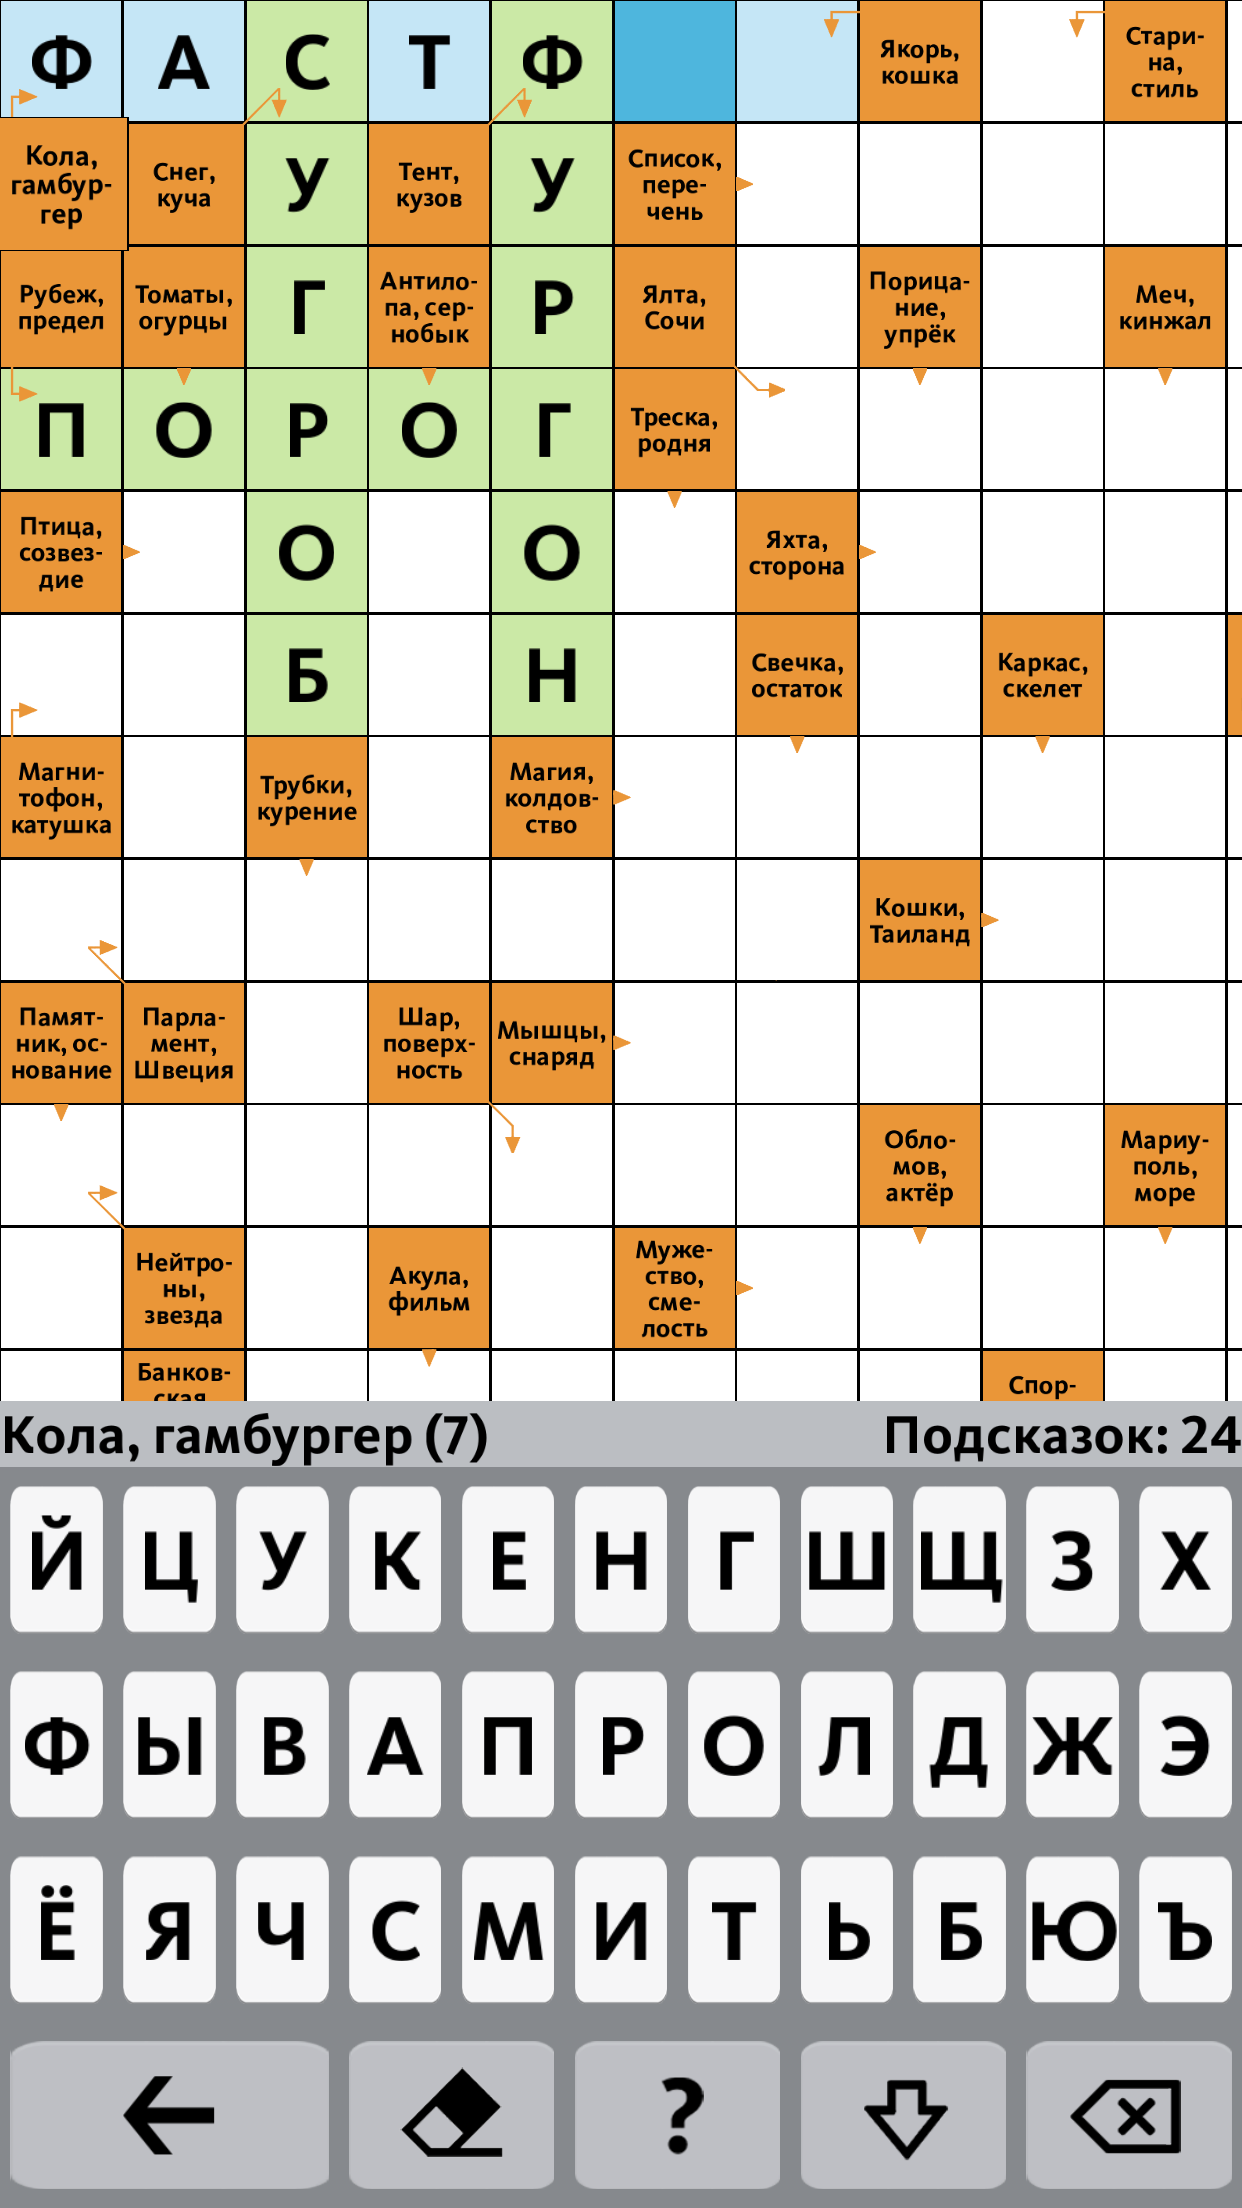 Android application Сканворд.ру журнал: сканворды screenshort